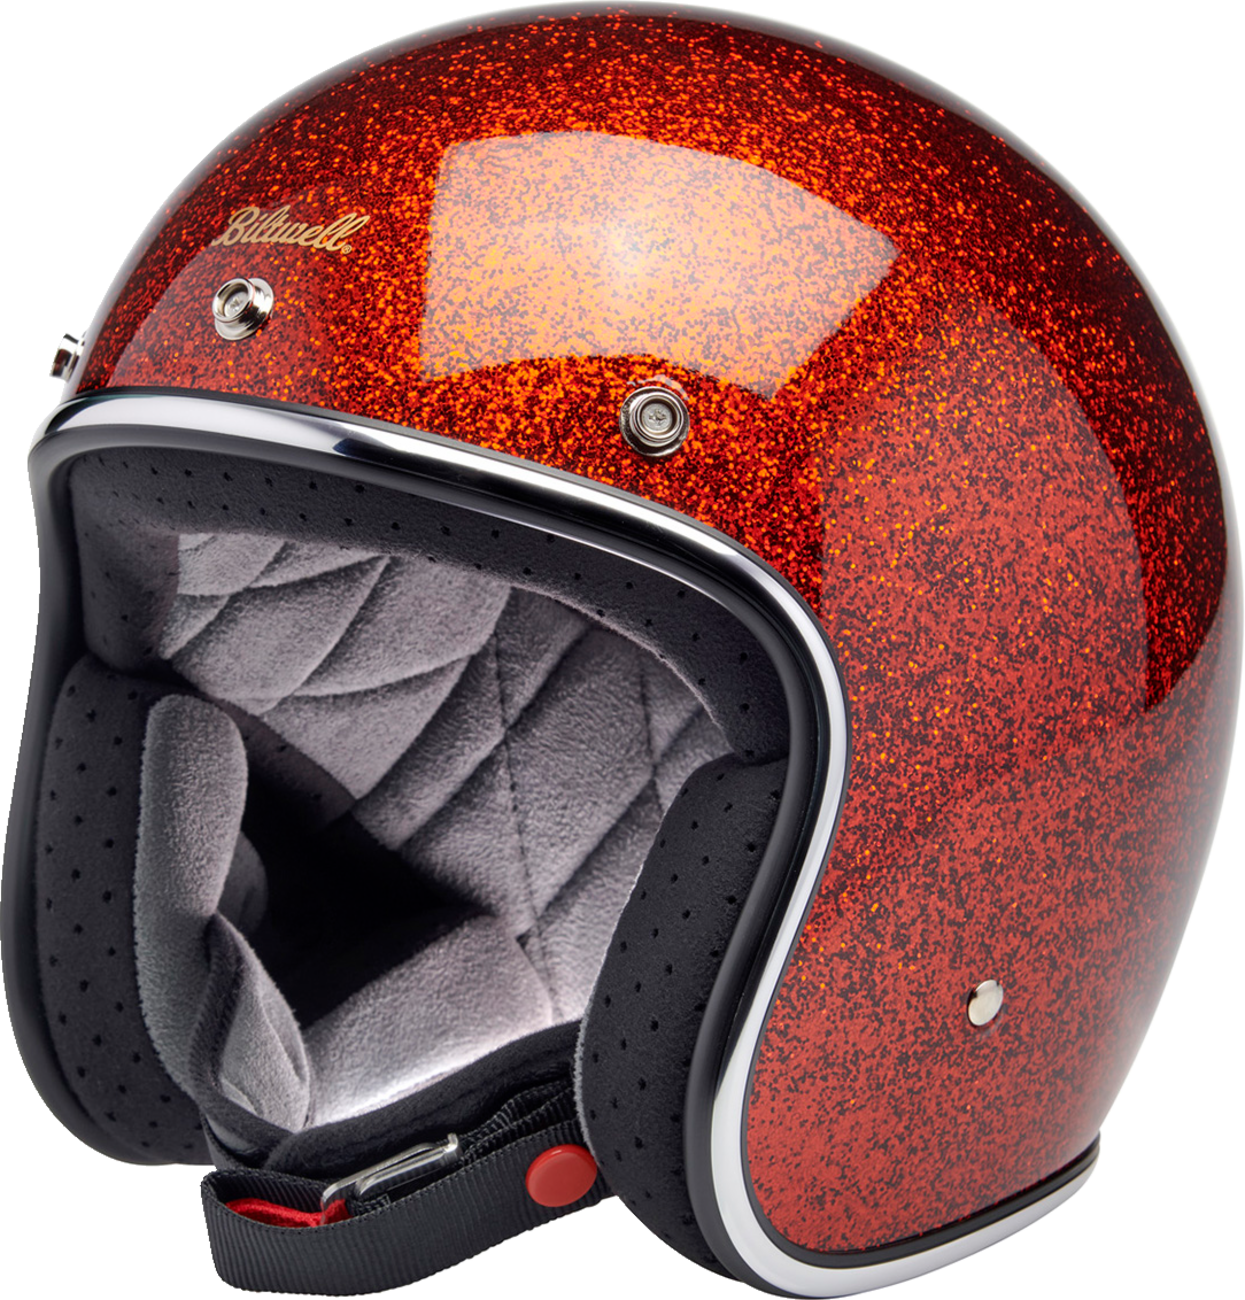 BILTWELL Bonanza Helmet - Rootbeer Megaflake - Small 1001-457-202